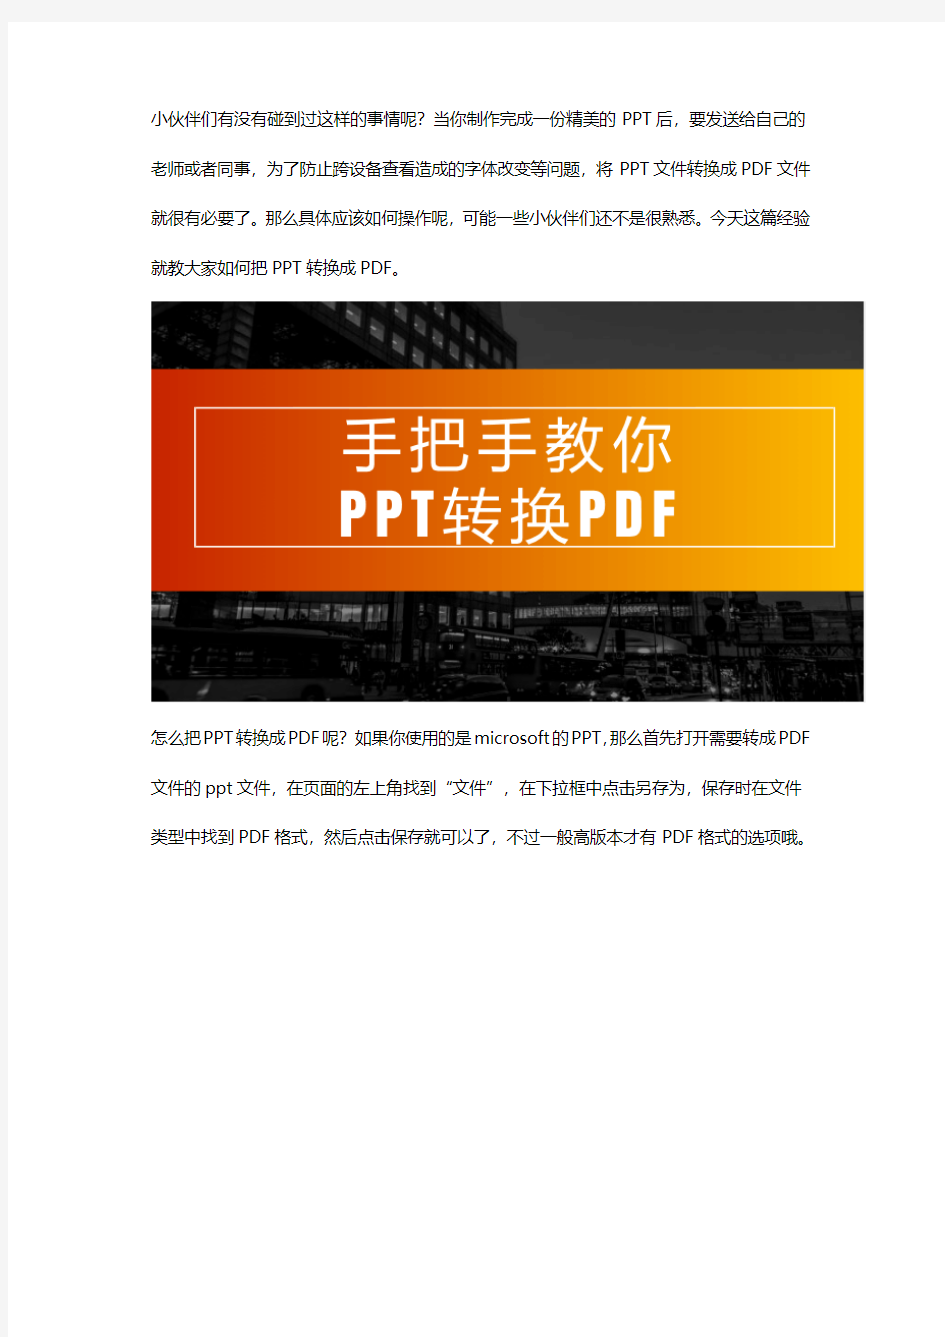 PPT转PDF：手把手教你如何将PPT文件转换成PDF文件